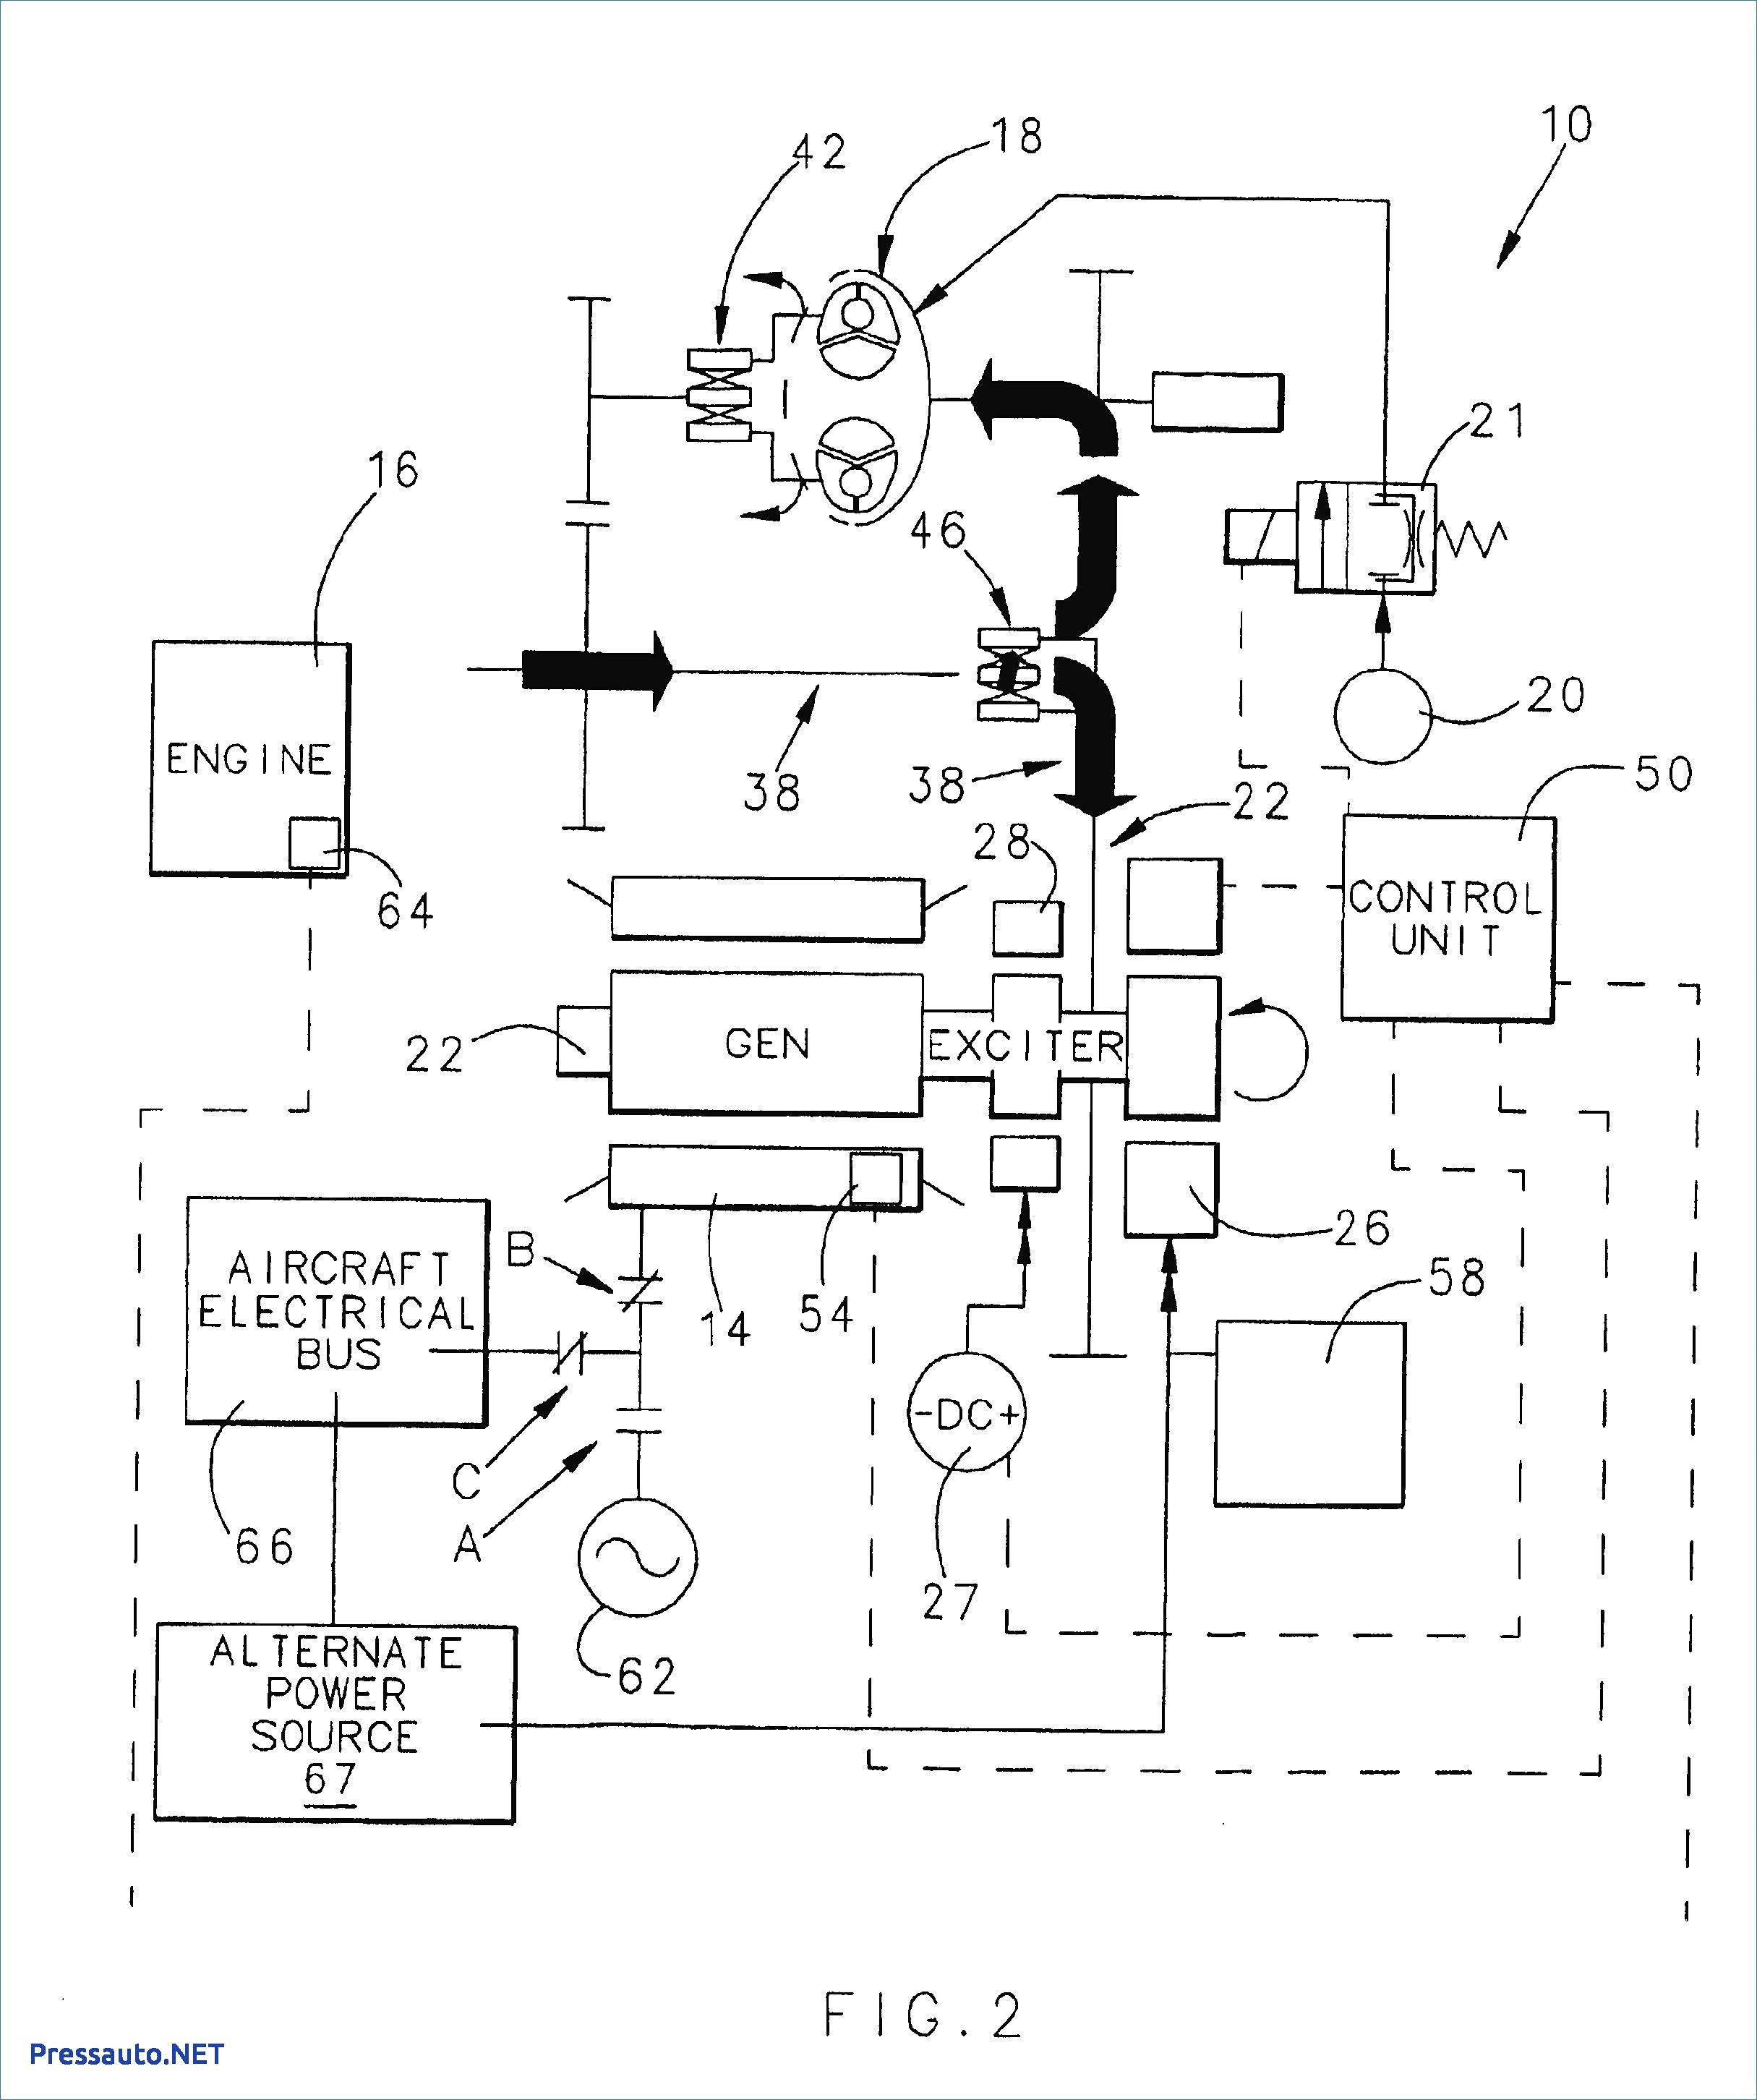 Powermaster Alternator Wiring Diagram | Wiring Diagram - Powermaster Alternator Wiring Diagram